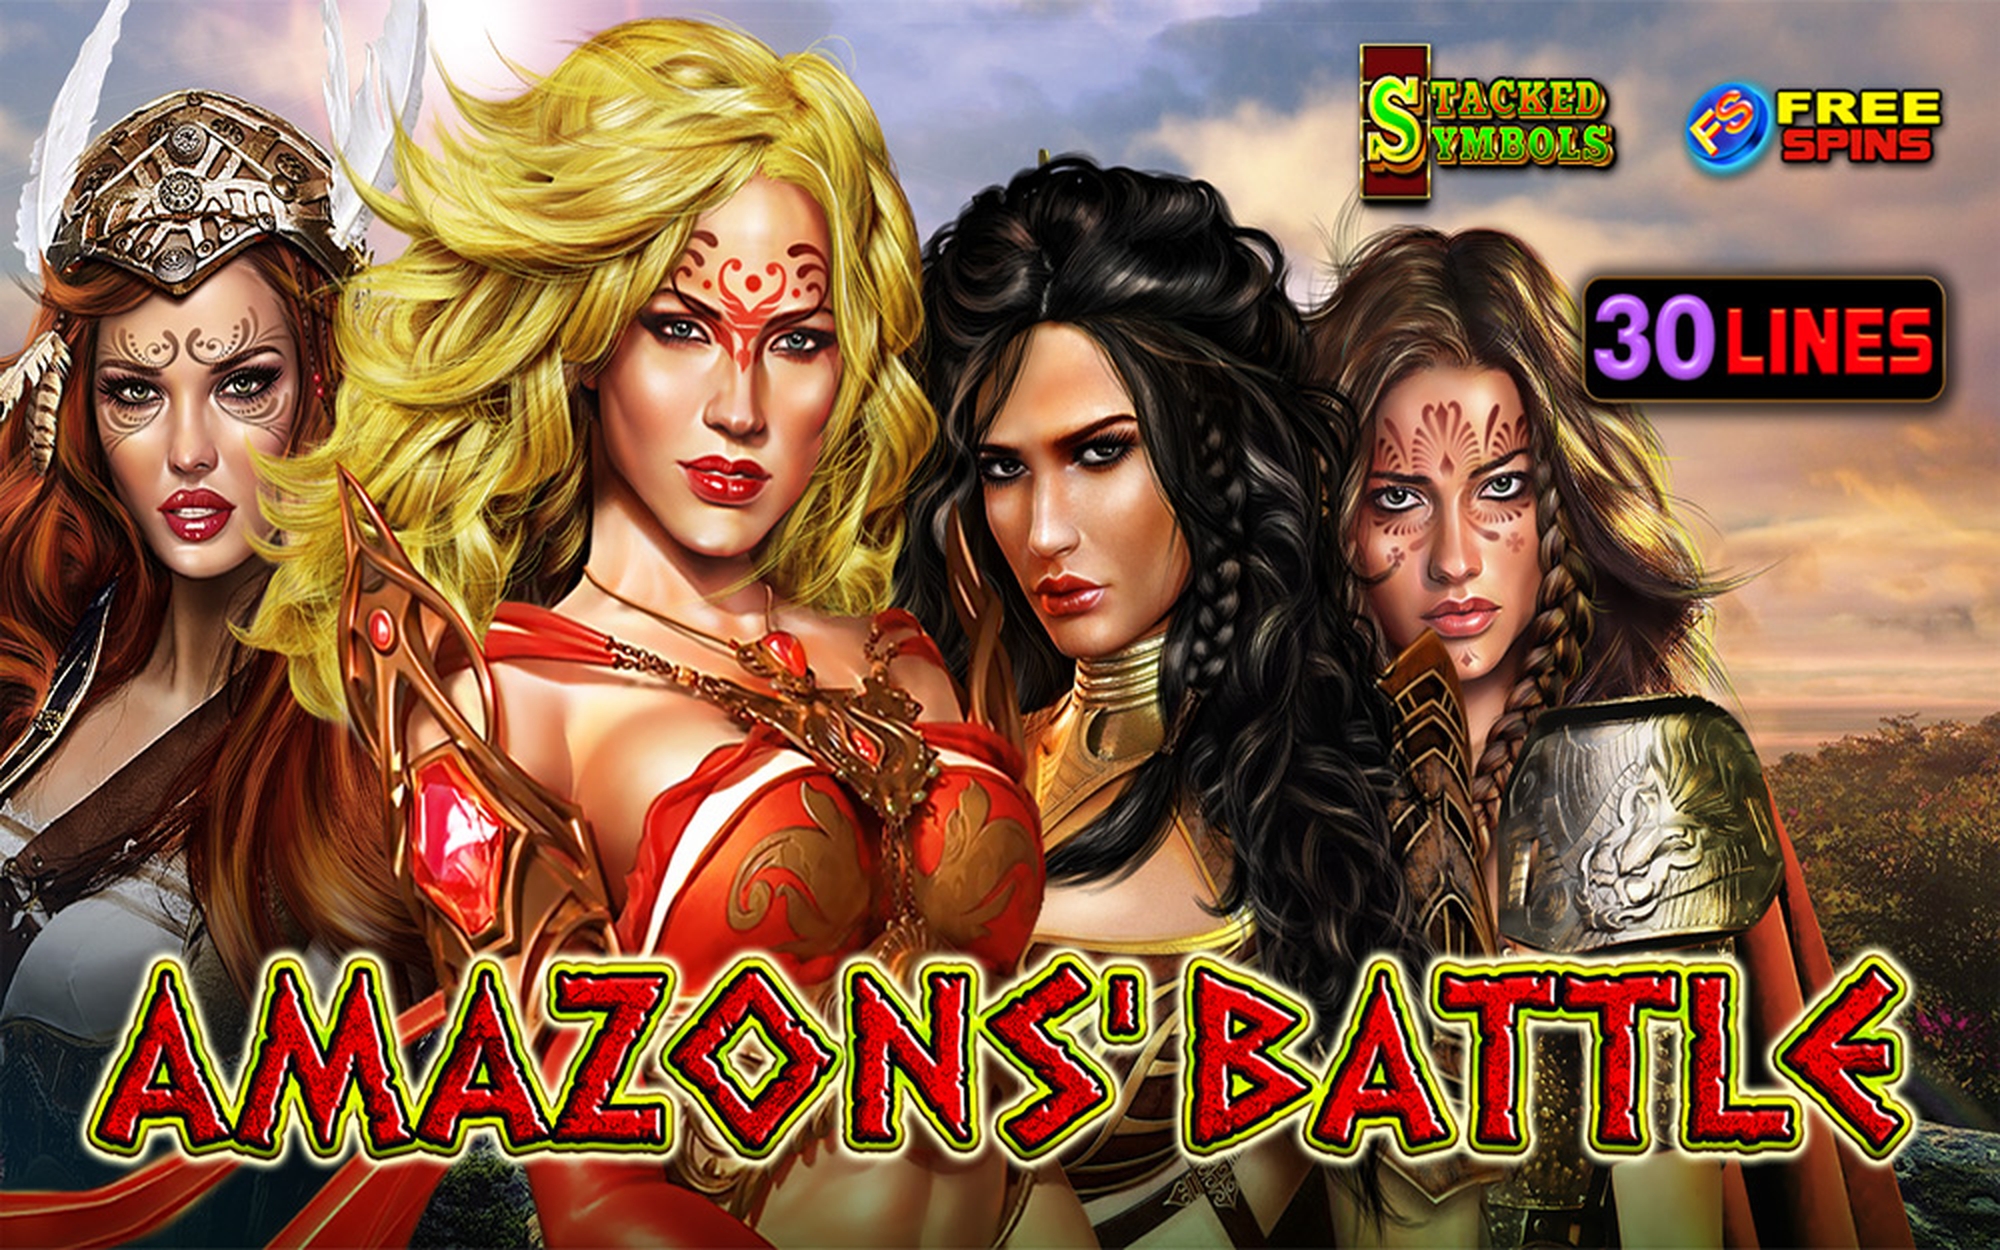 Amazons' Battle